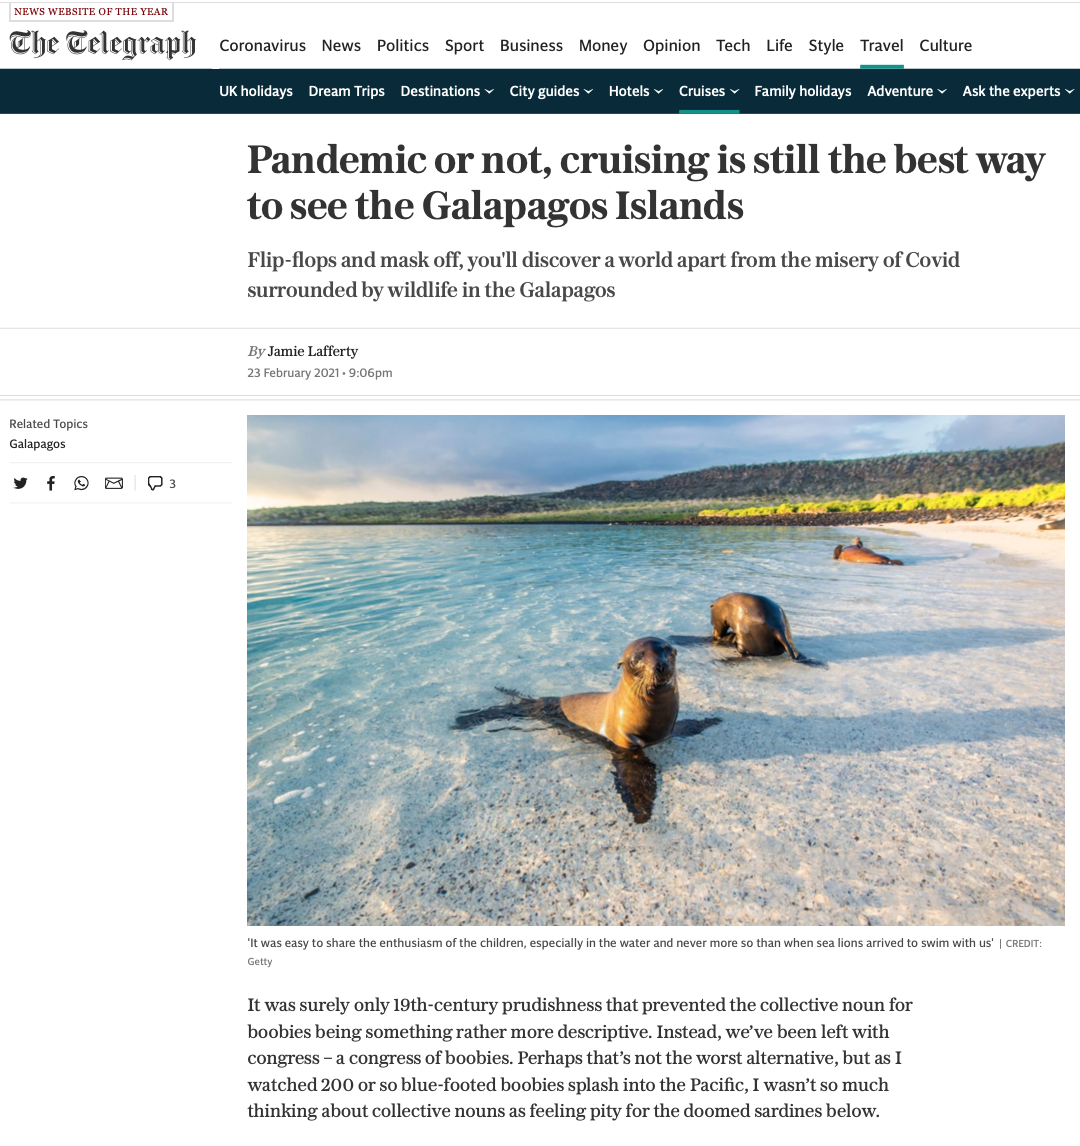 Ecoventura featured in UK's Telegraph newspaper